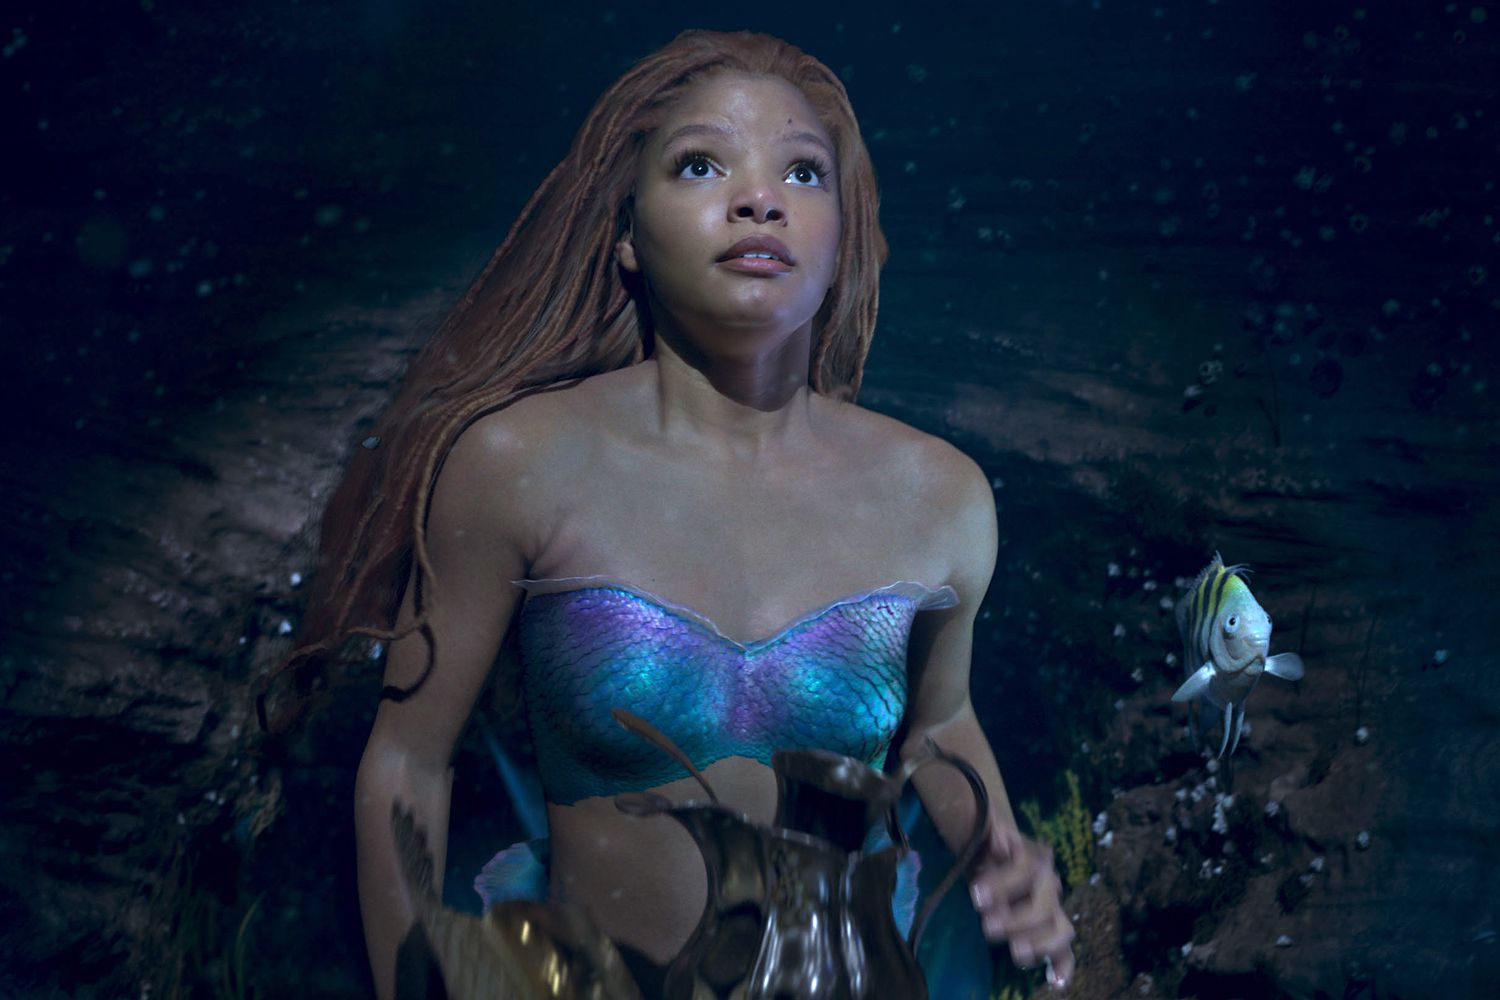 ‘The Little Mermaid’ makes box office splash with $95.5 million opening